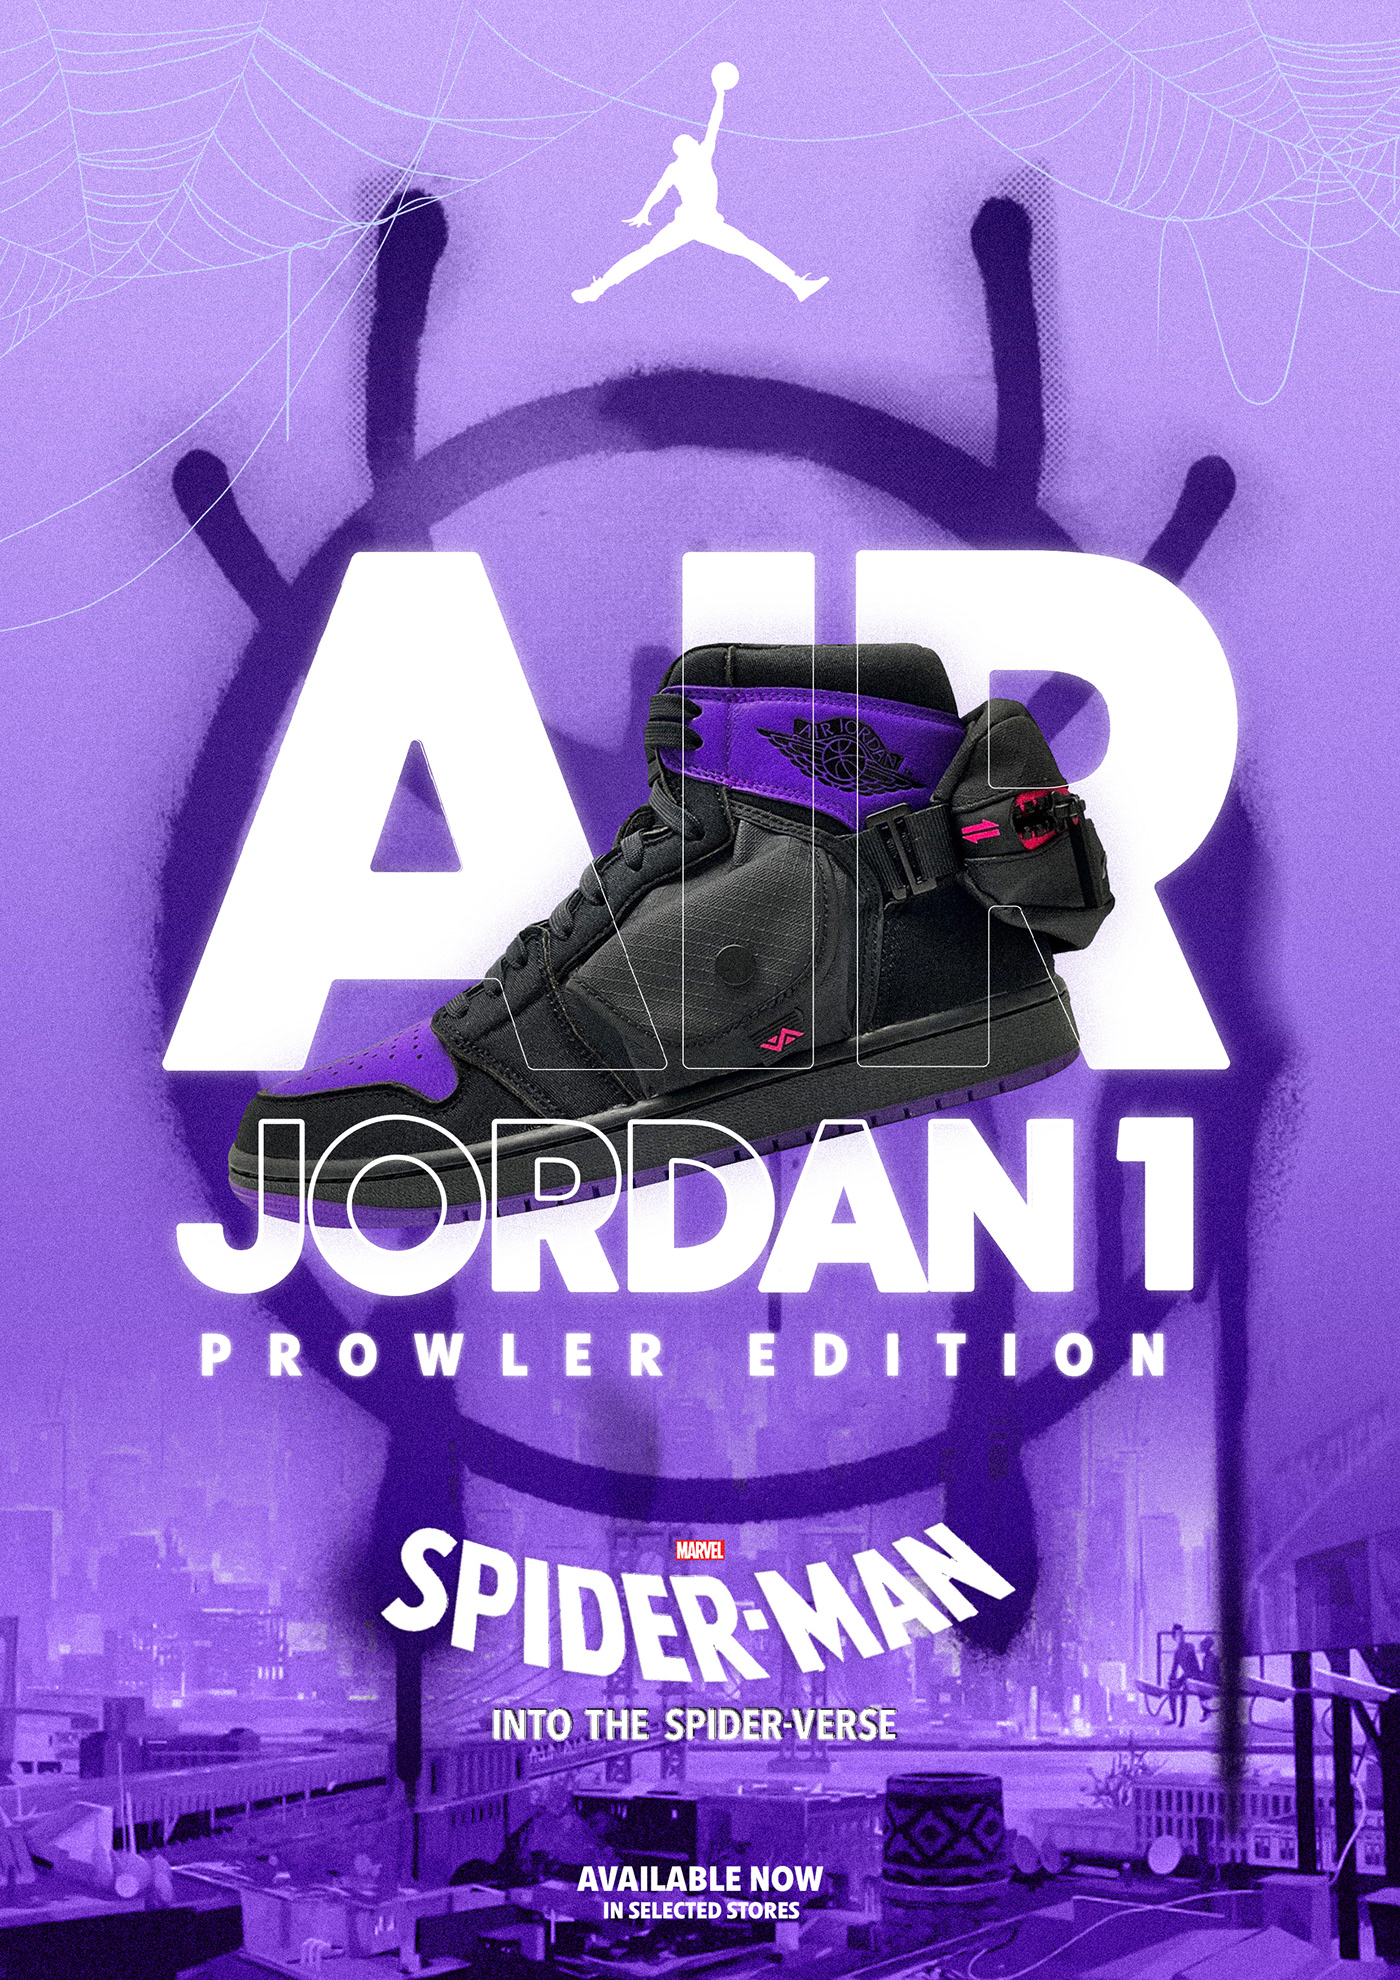 air jordan Air Jordan 1 spiderverse marvel spiderman shoes poster banner